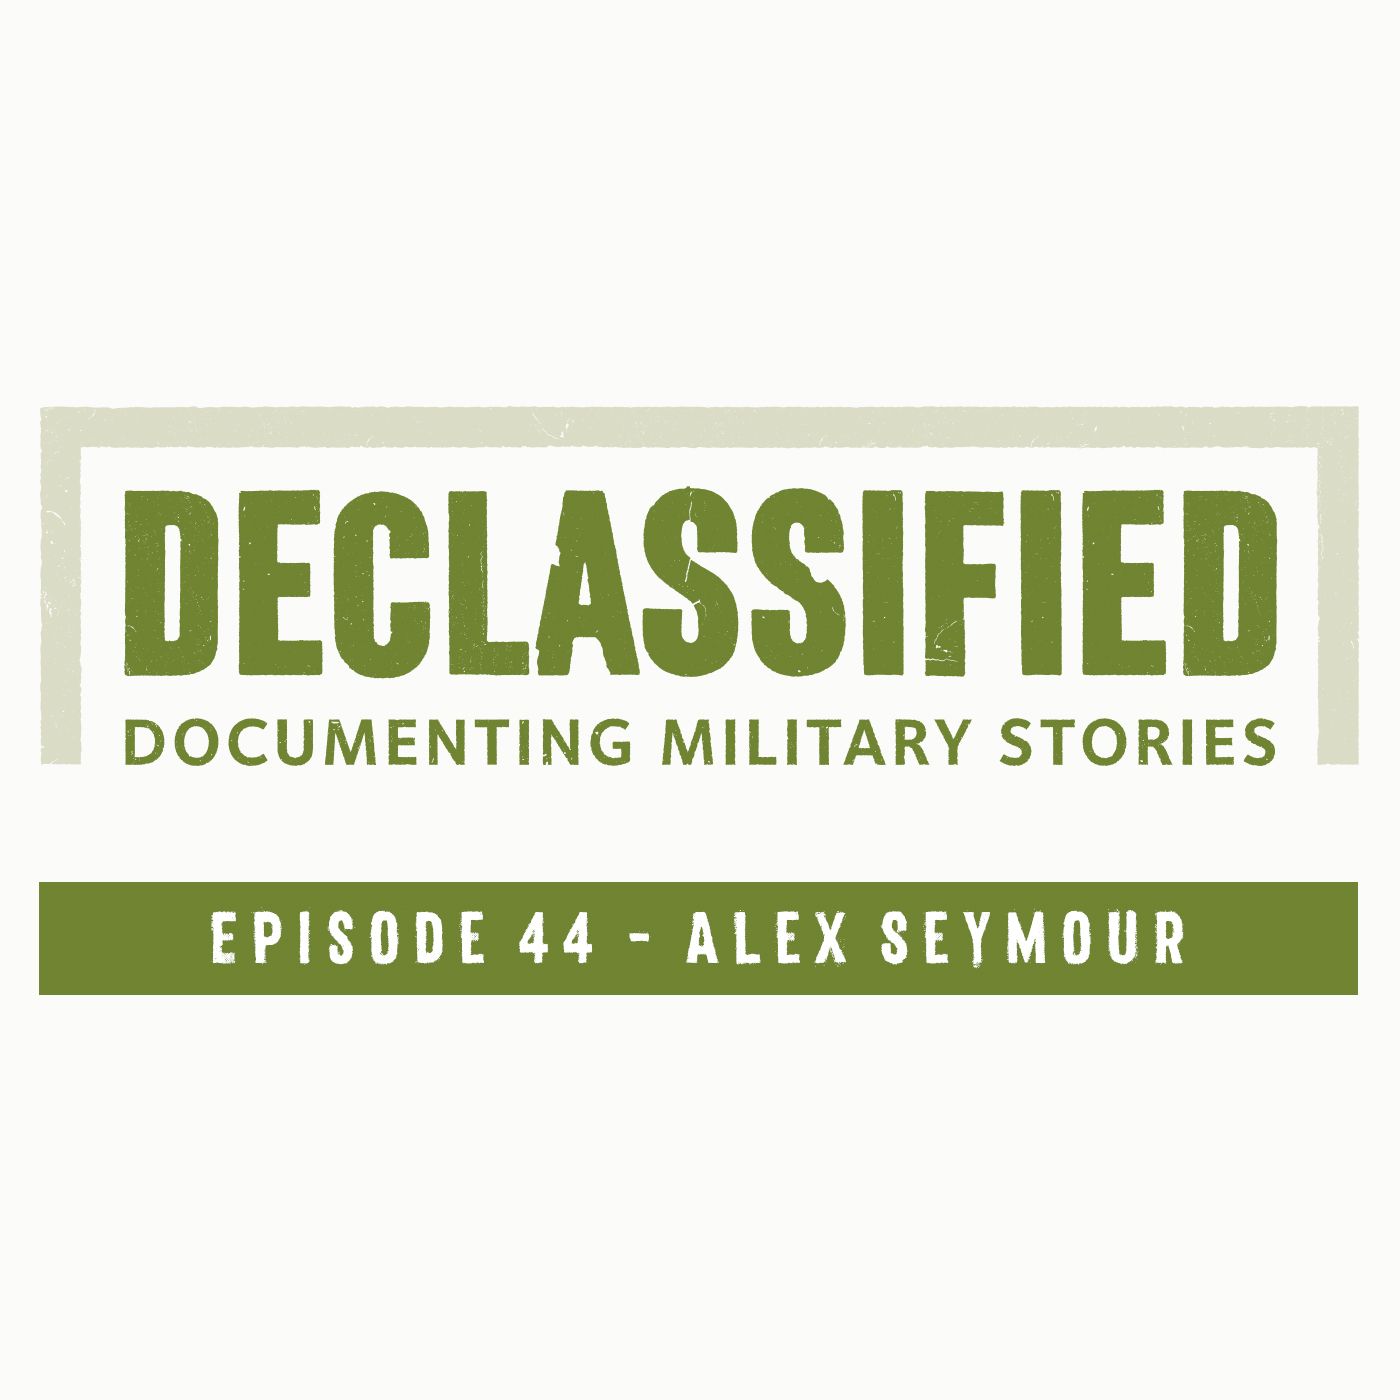 Episode 44 - Alex Seymour